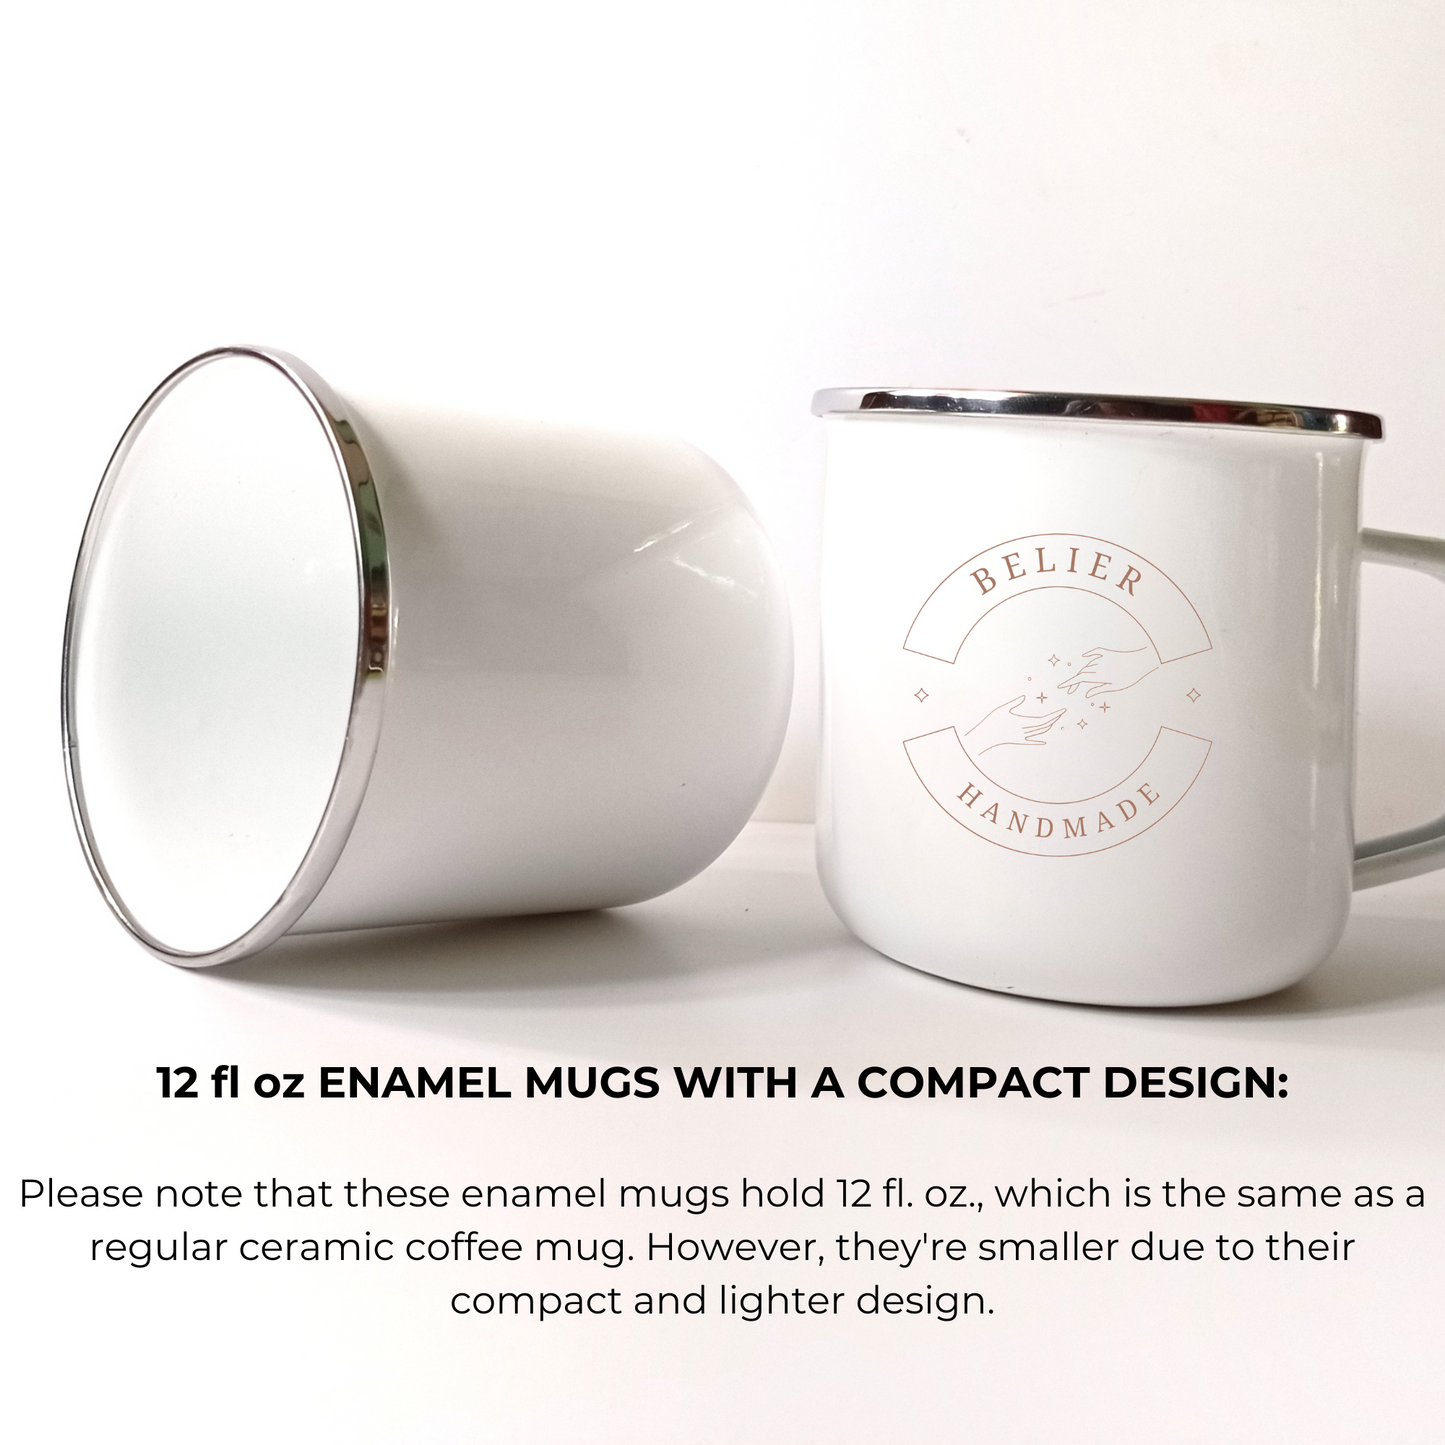 Godparent Proposal with Personalized Mug